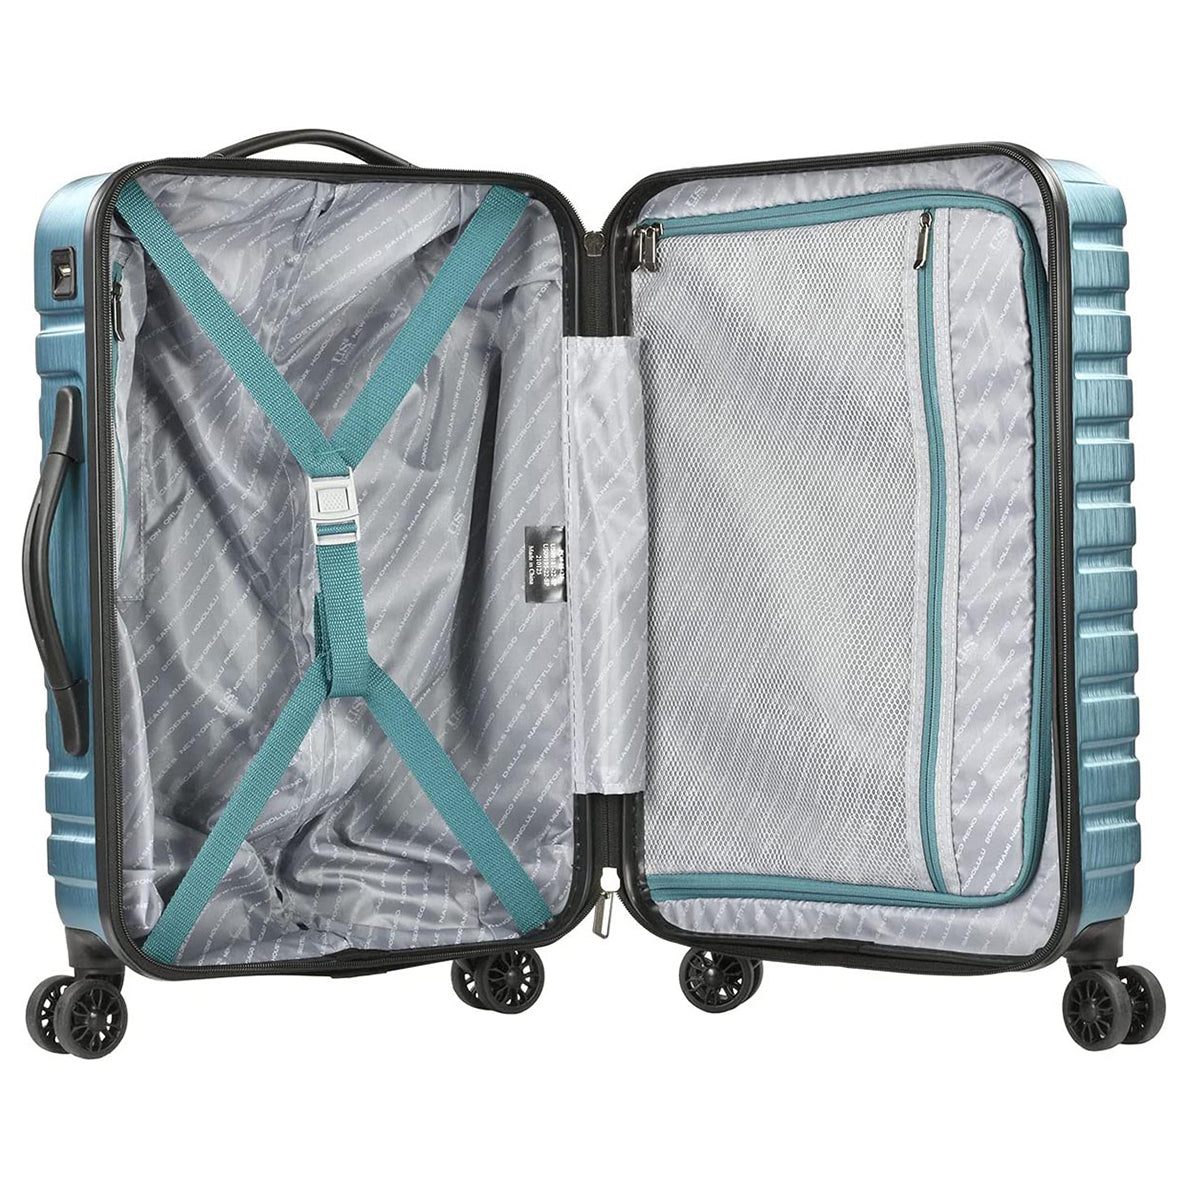 U.S. Traveler Boren Hardside Spinner Luggage With Aluminum Handle, Carry-on